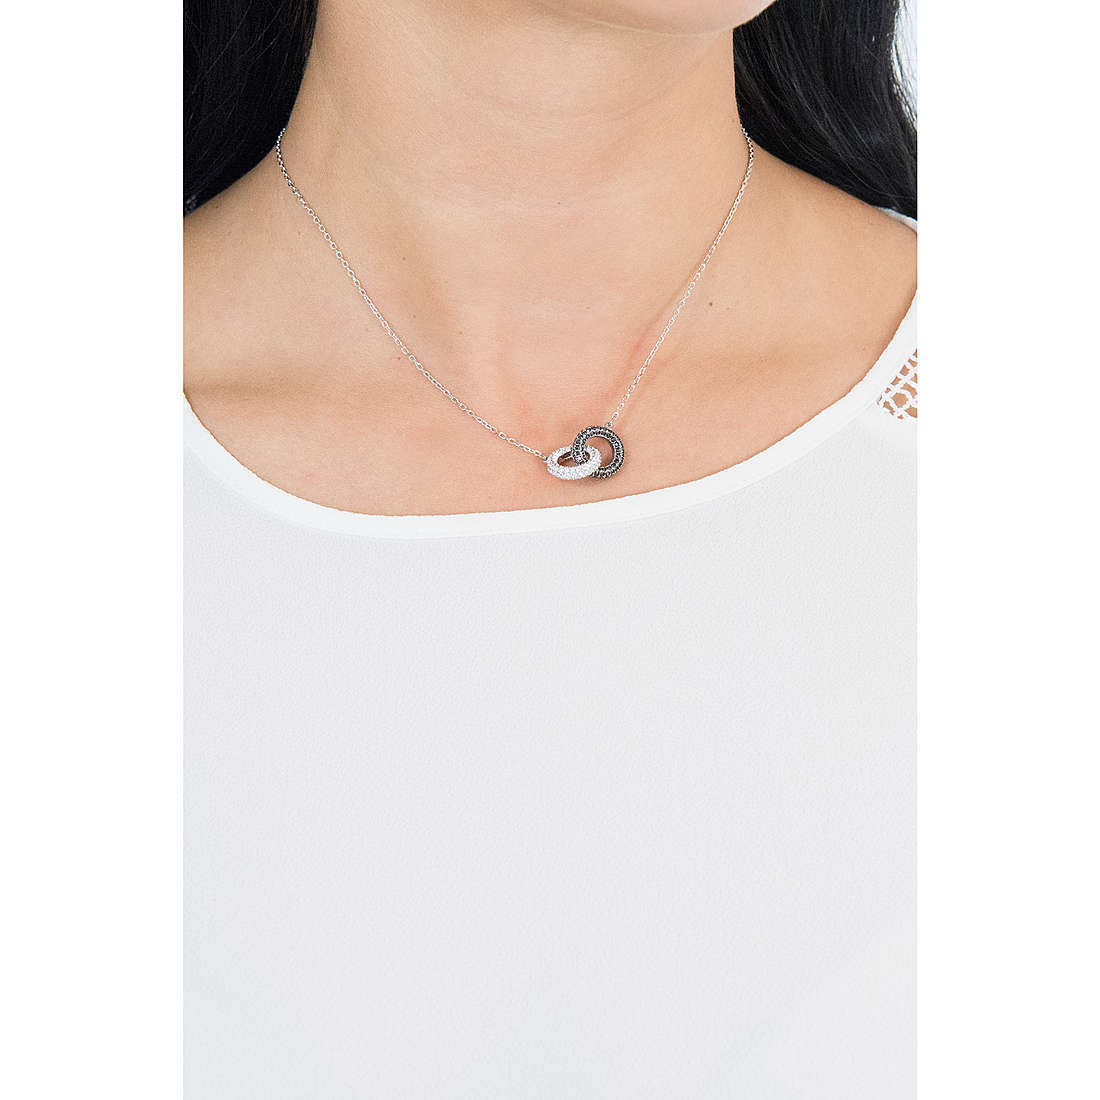 Swarovski necklaces Stone woman 5445706 wearing